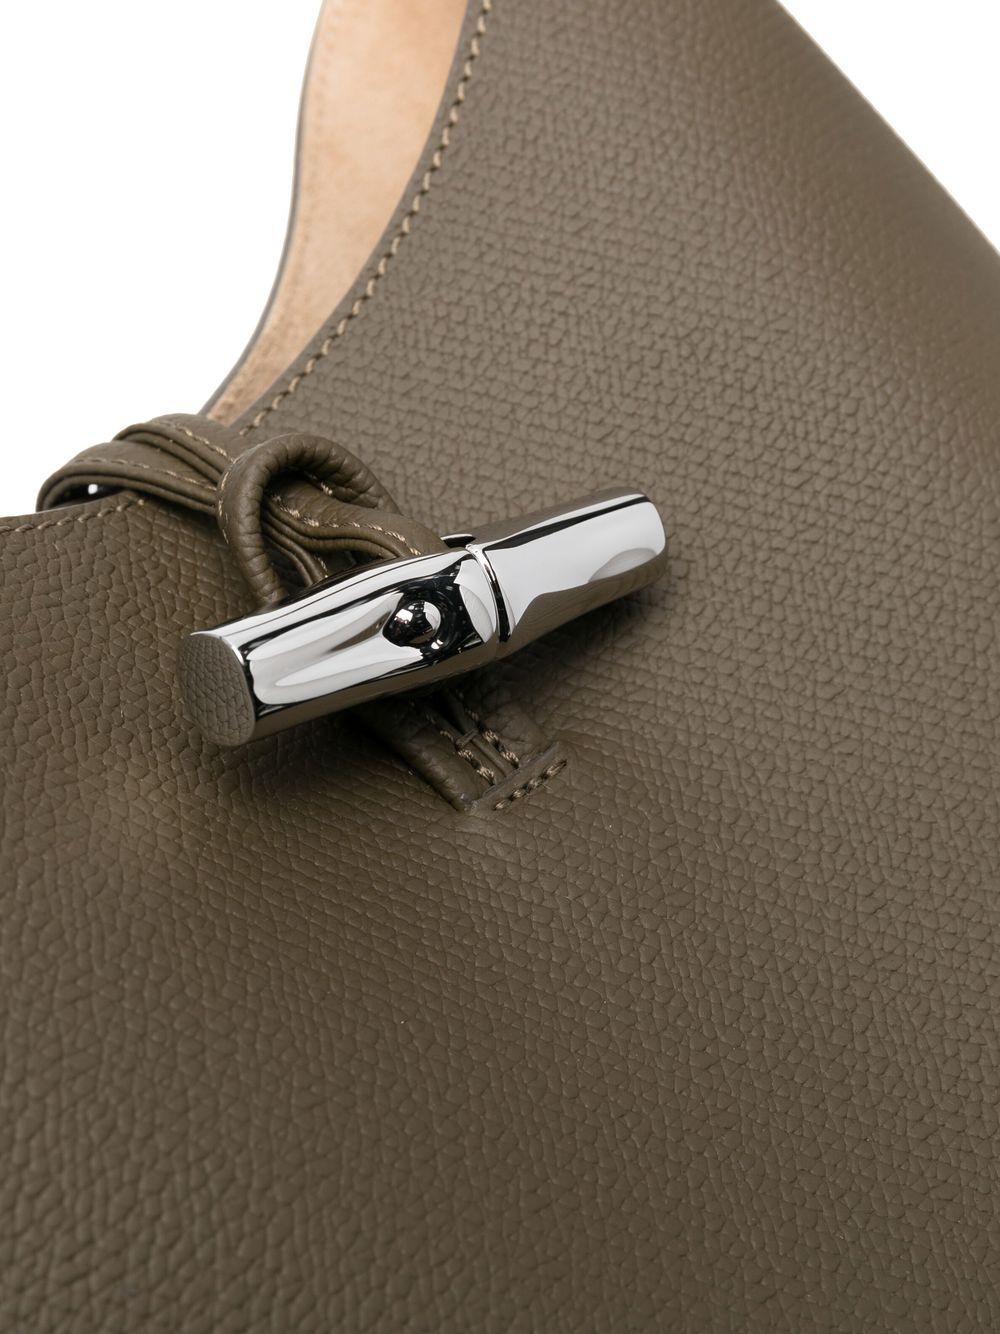 Textured Leather ROSEAU Hobo Bag